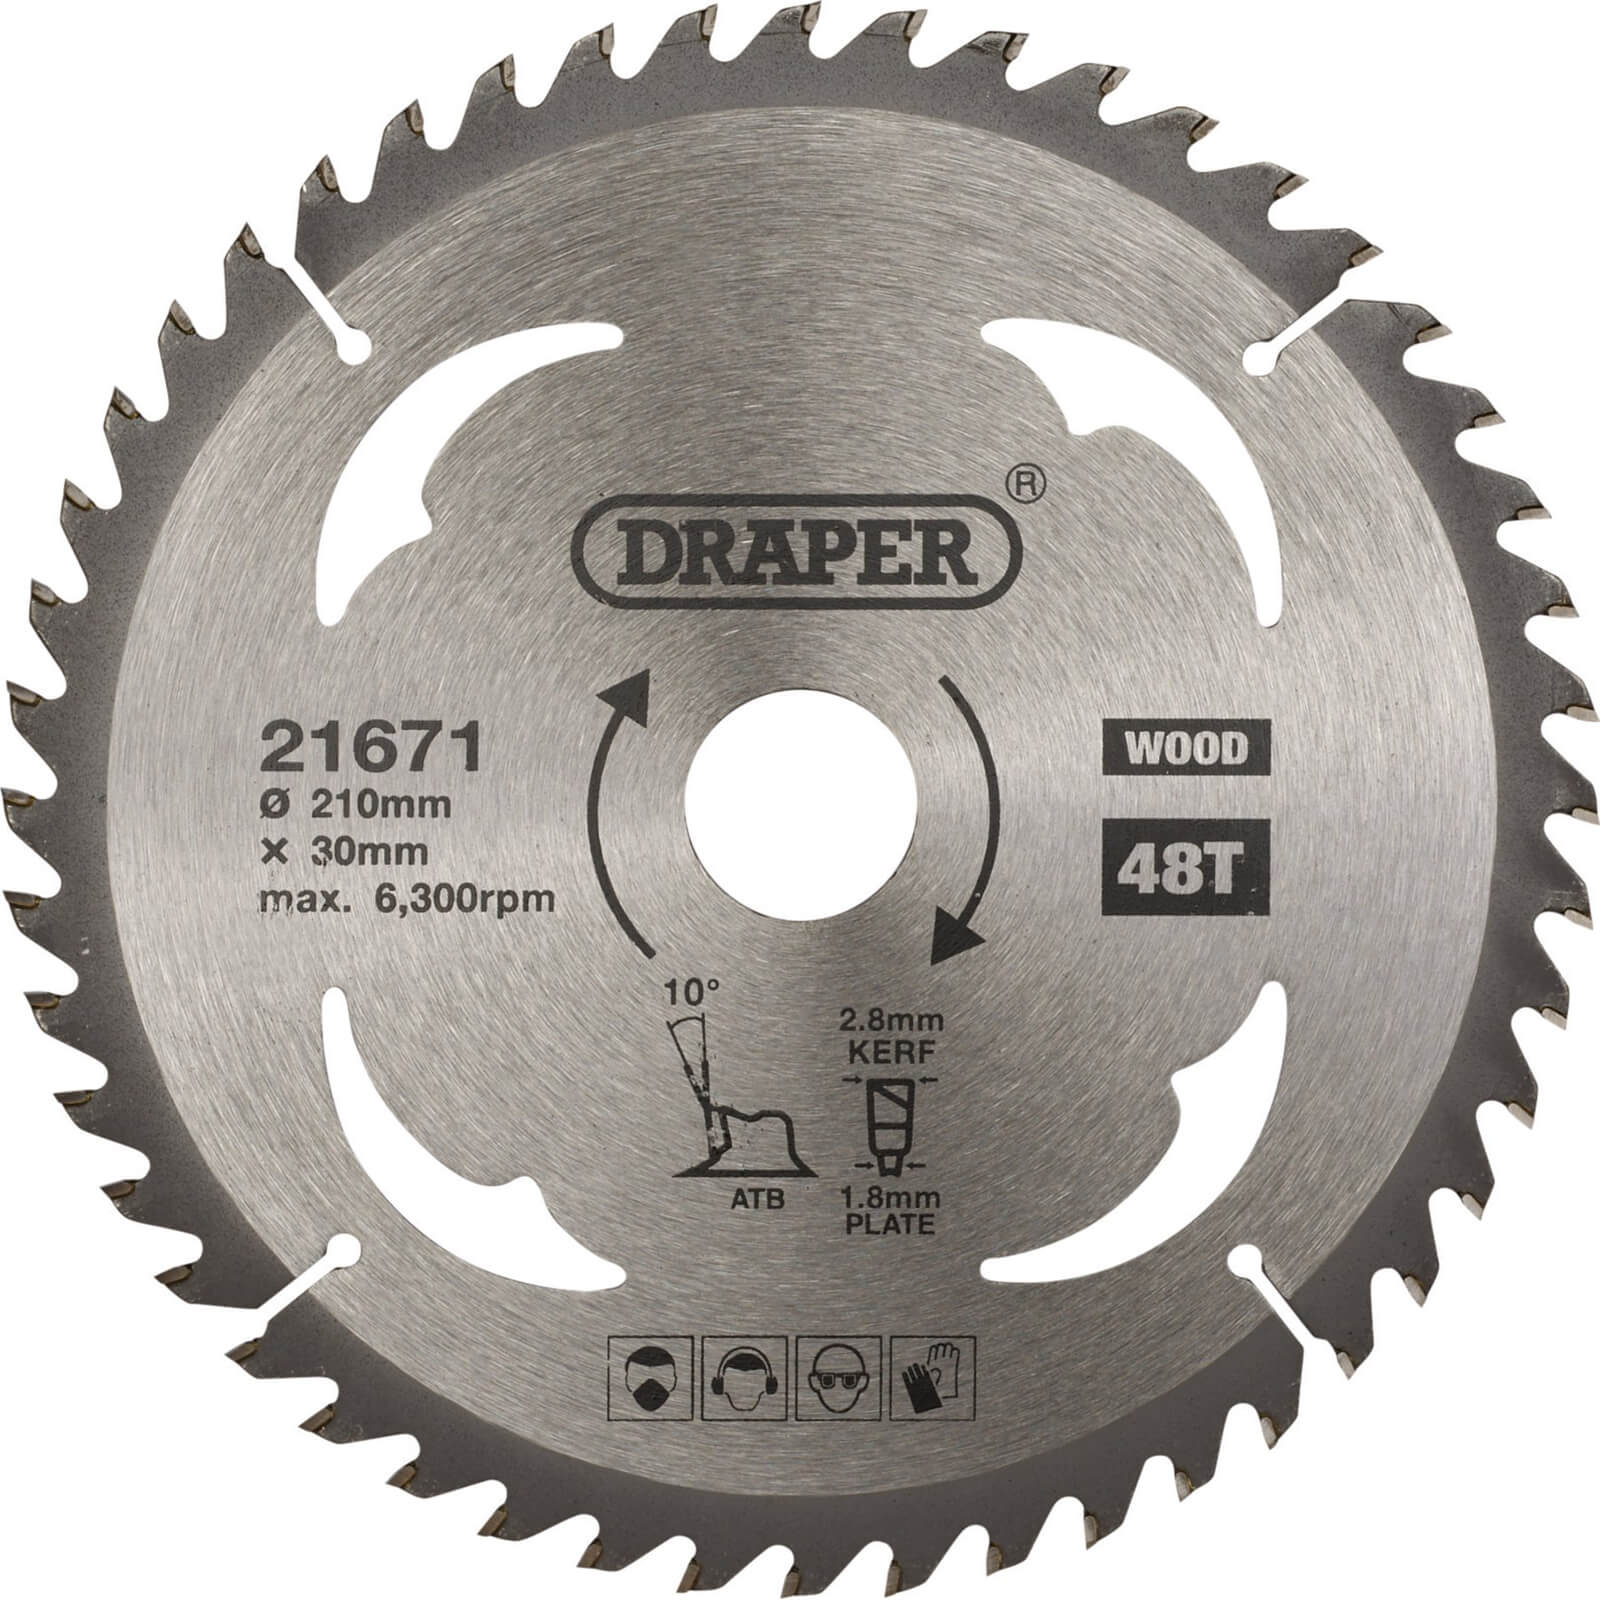 Image of Draper TCT Wood Cutting Circular Saw Blade 210mm 48T 30mm